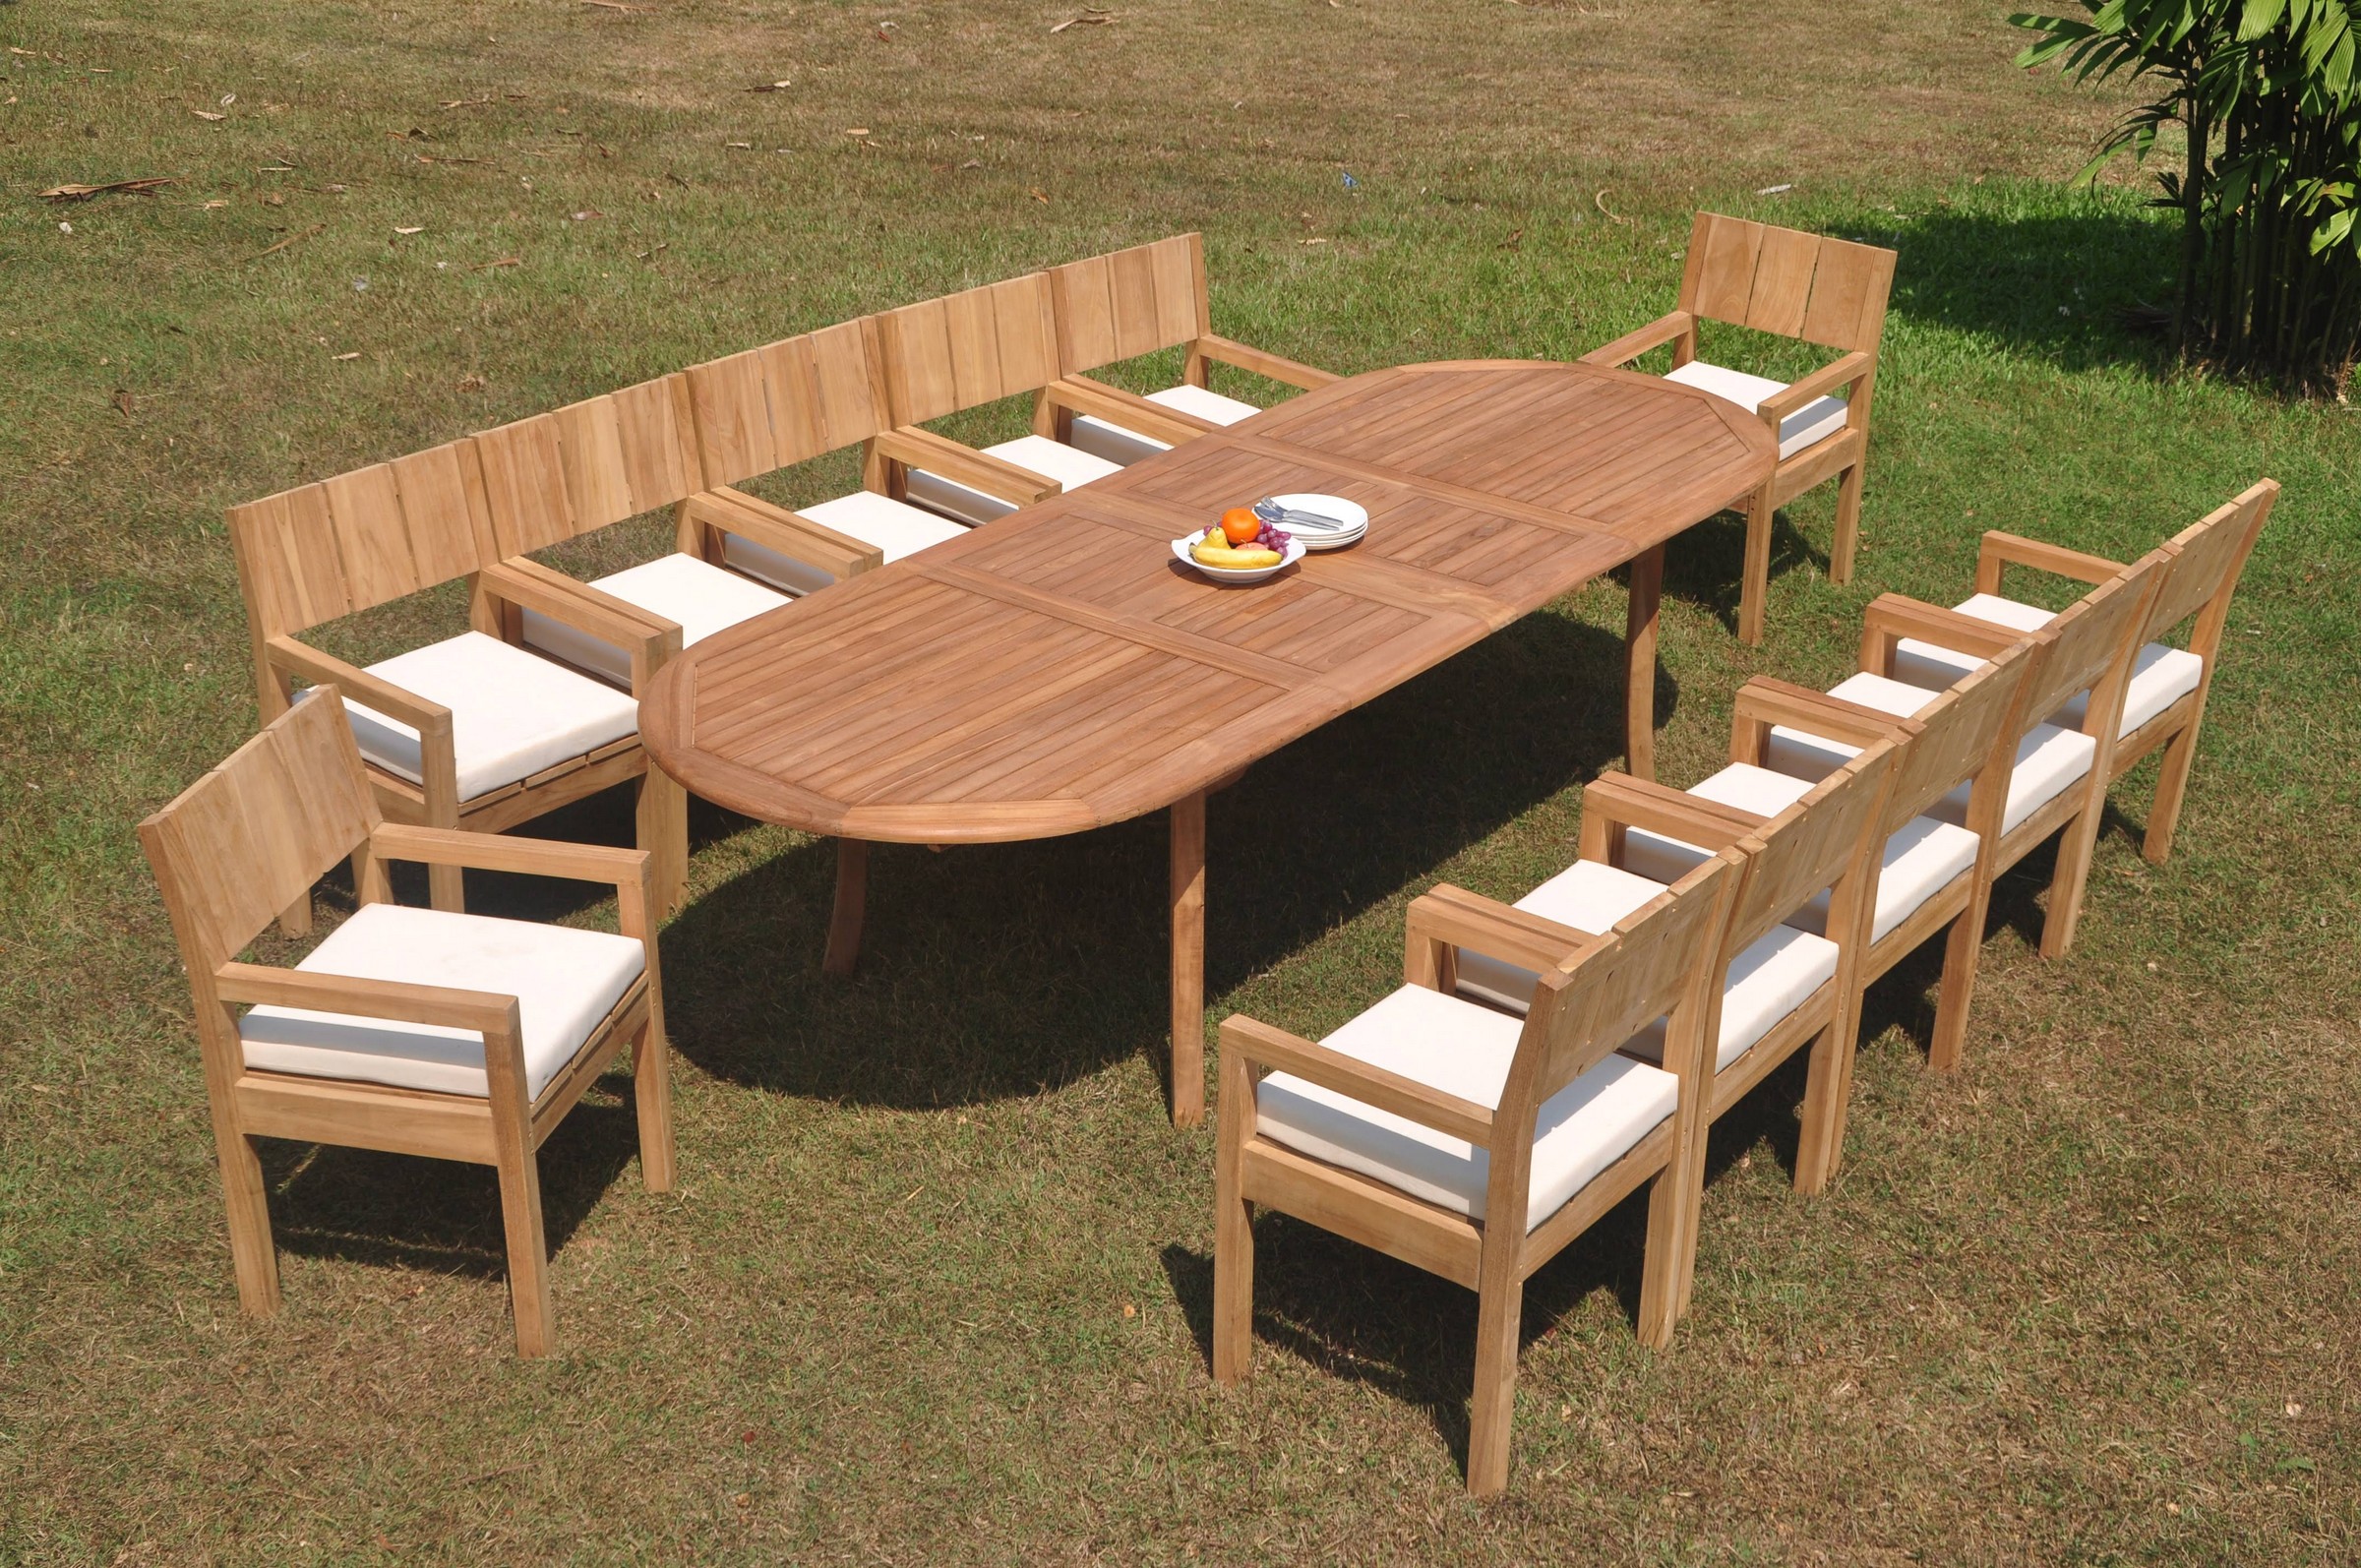 Teak Outdoor Dining Table